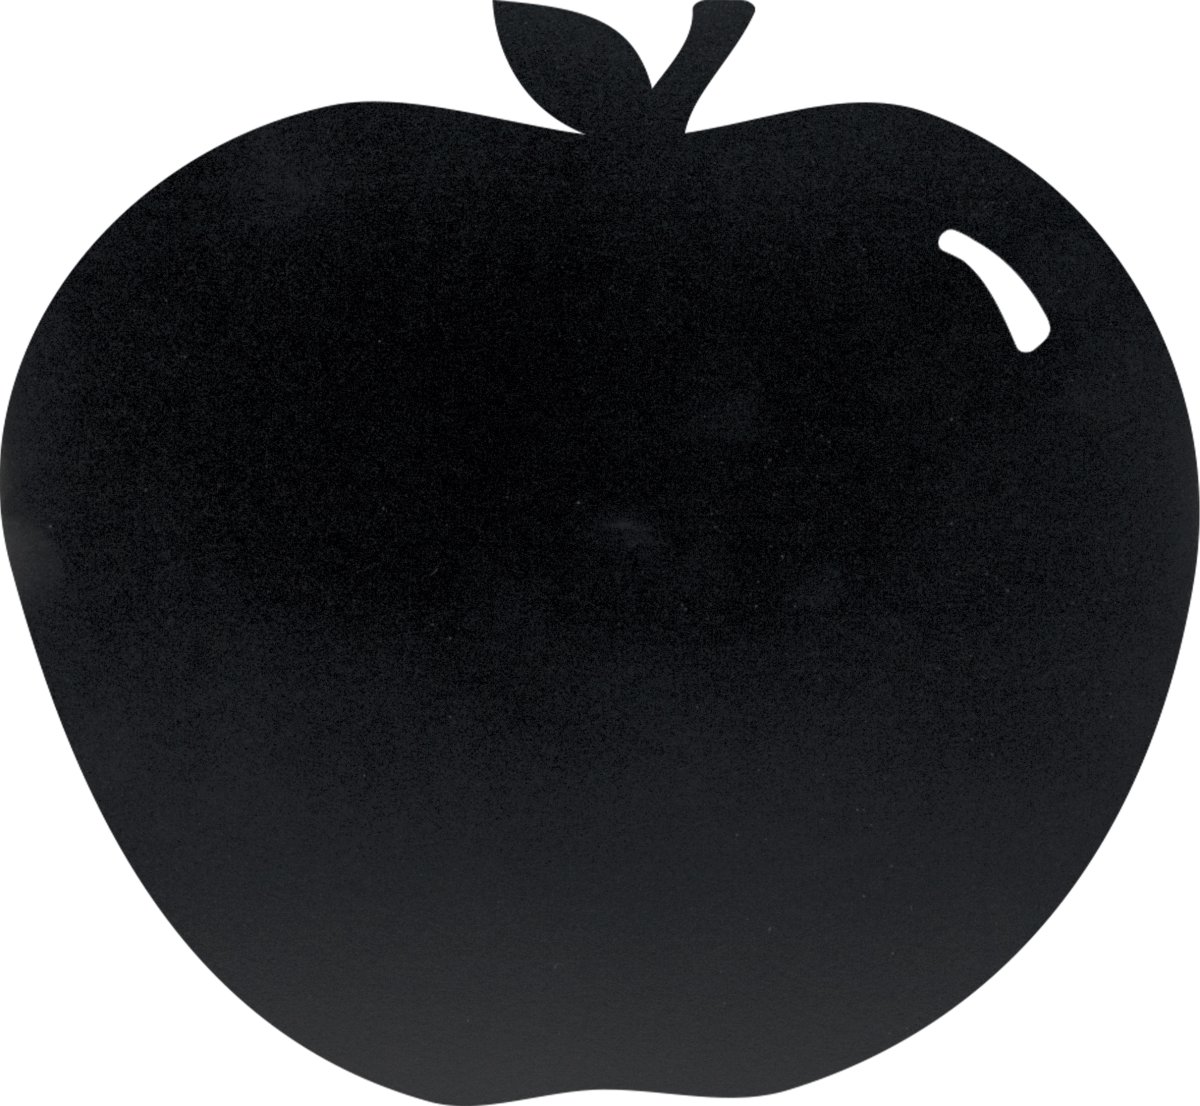 Securit Silhouette Apple Kridttavle